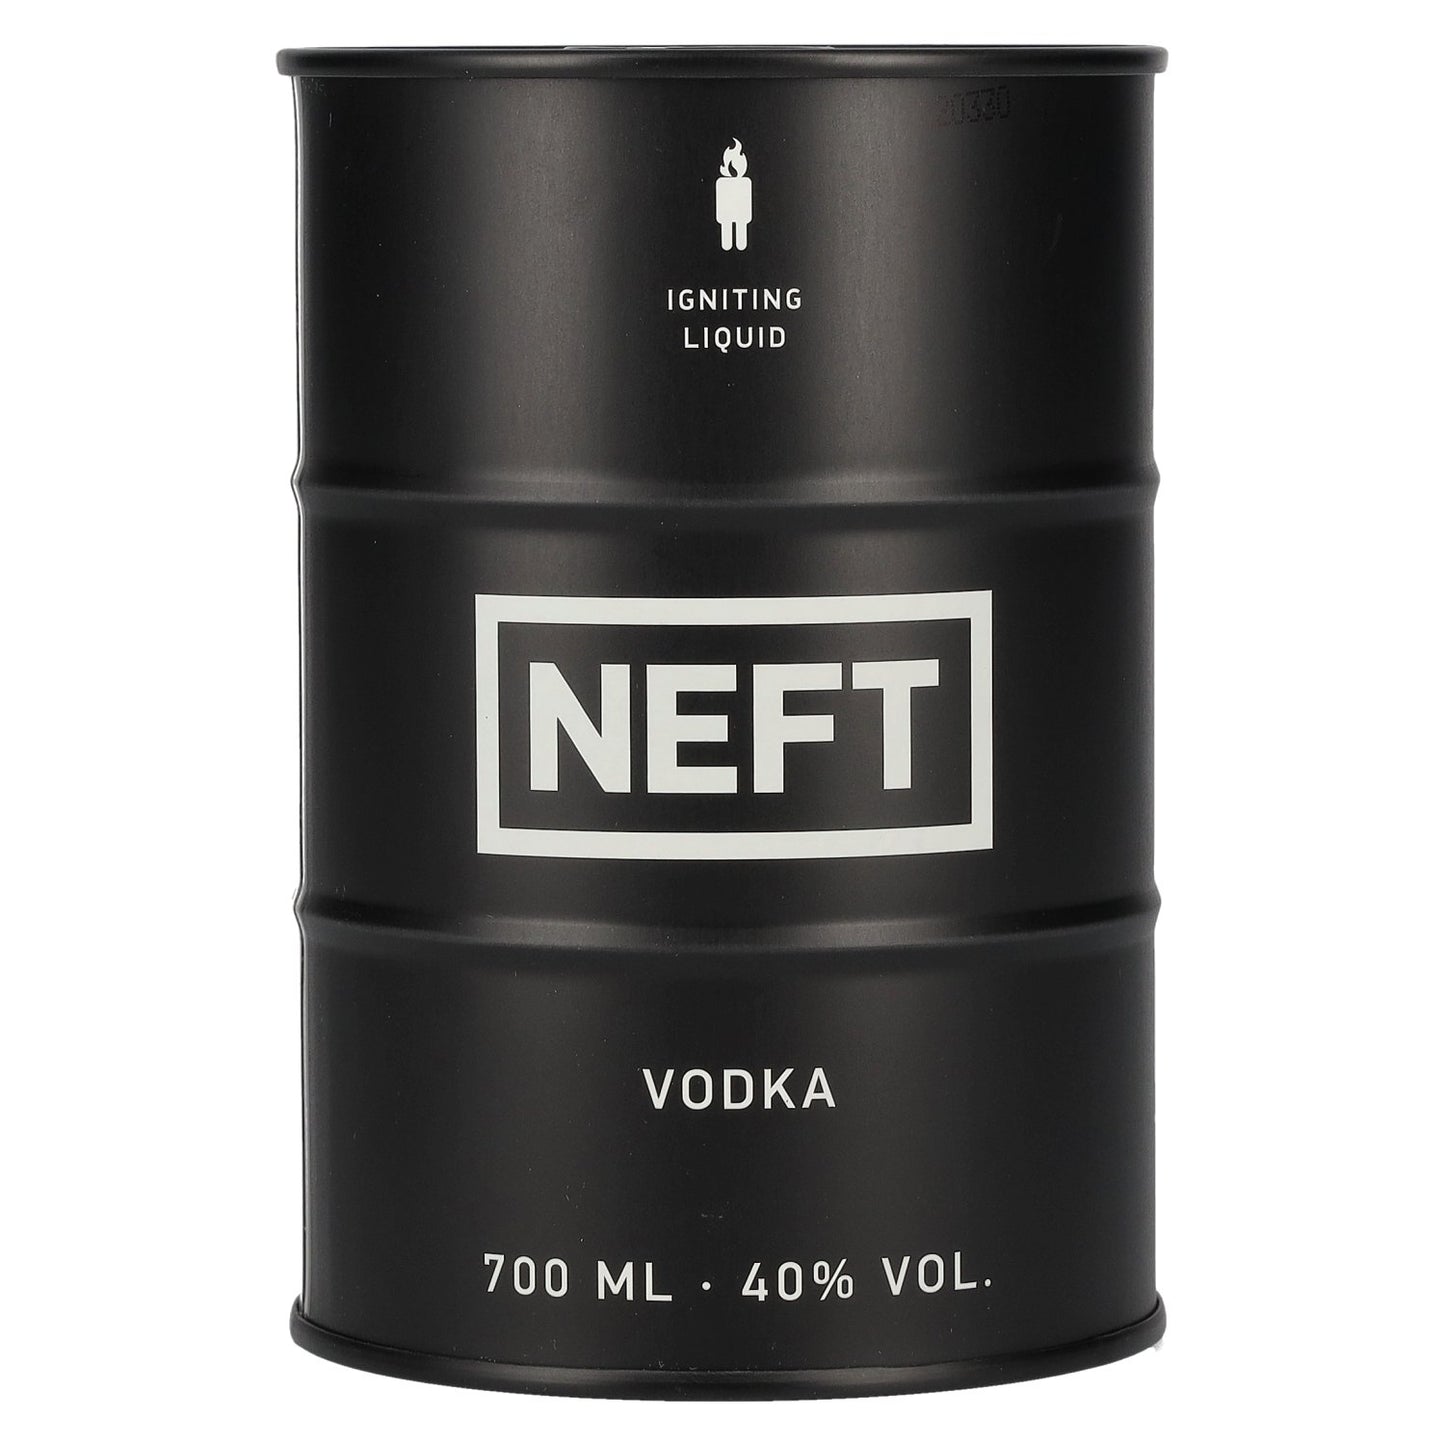 Vodka NEFT Black Barrel